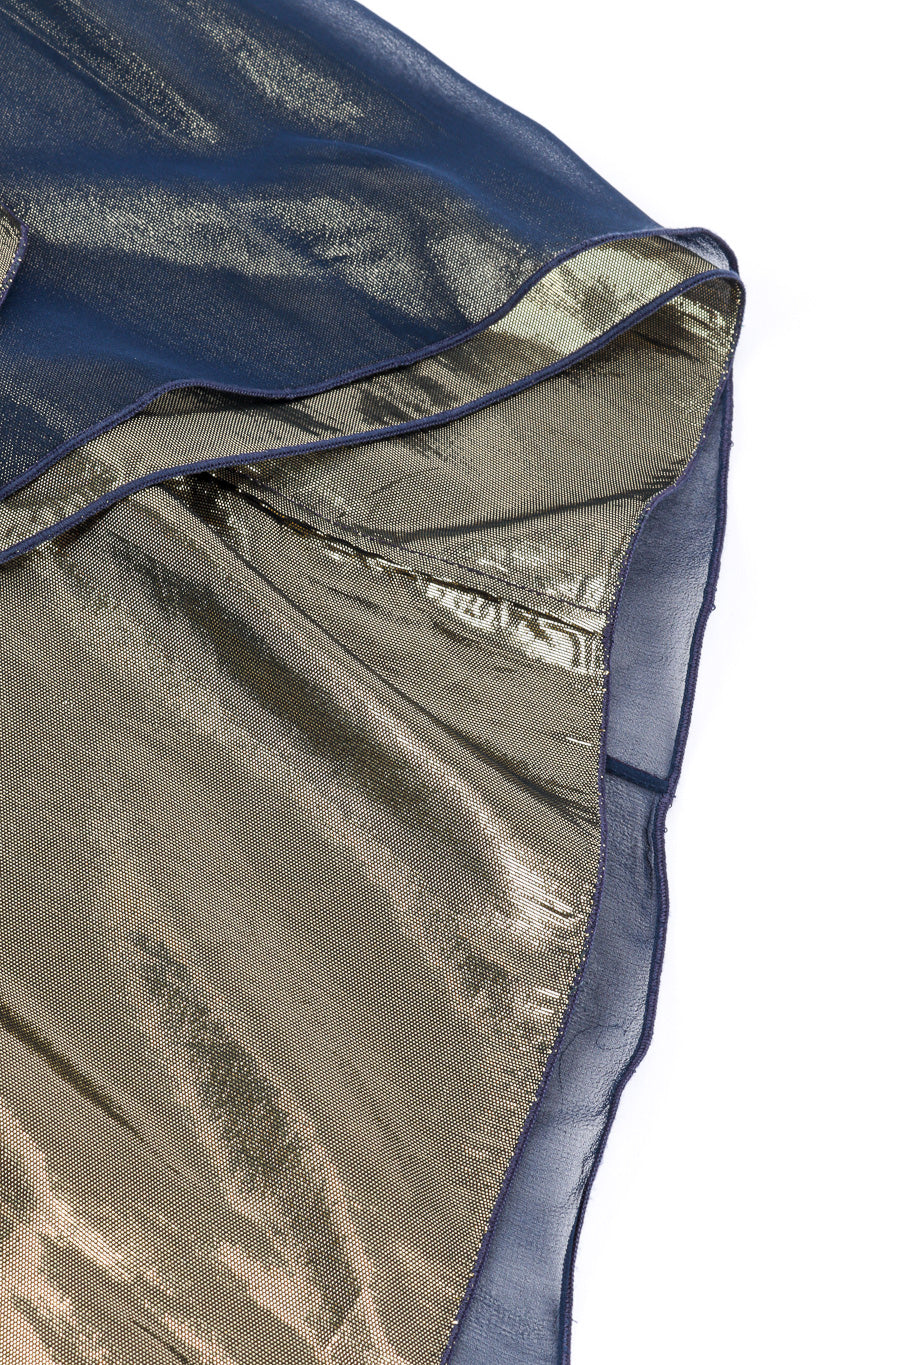 Vintage Holly's Harp Metallic Silk Wrap Dress hem closeup @recessla